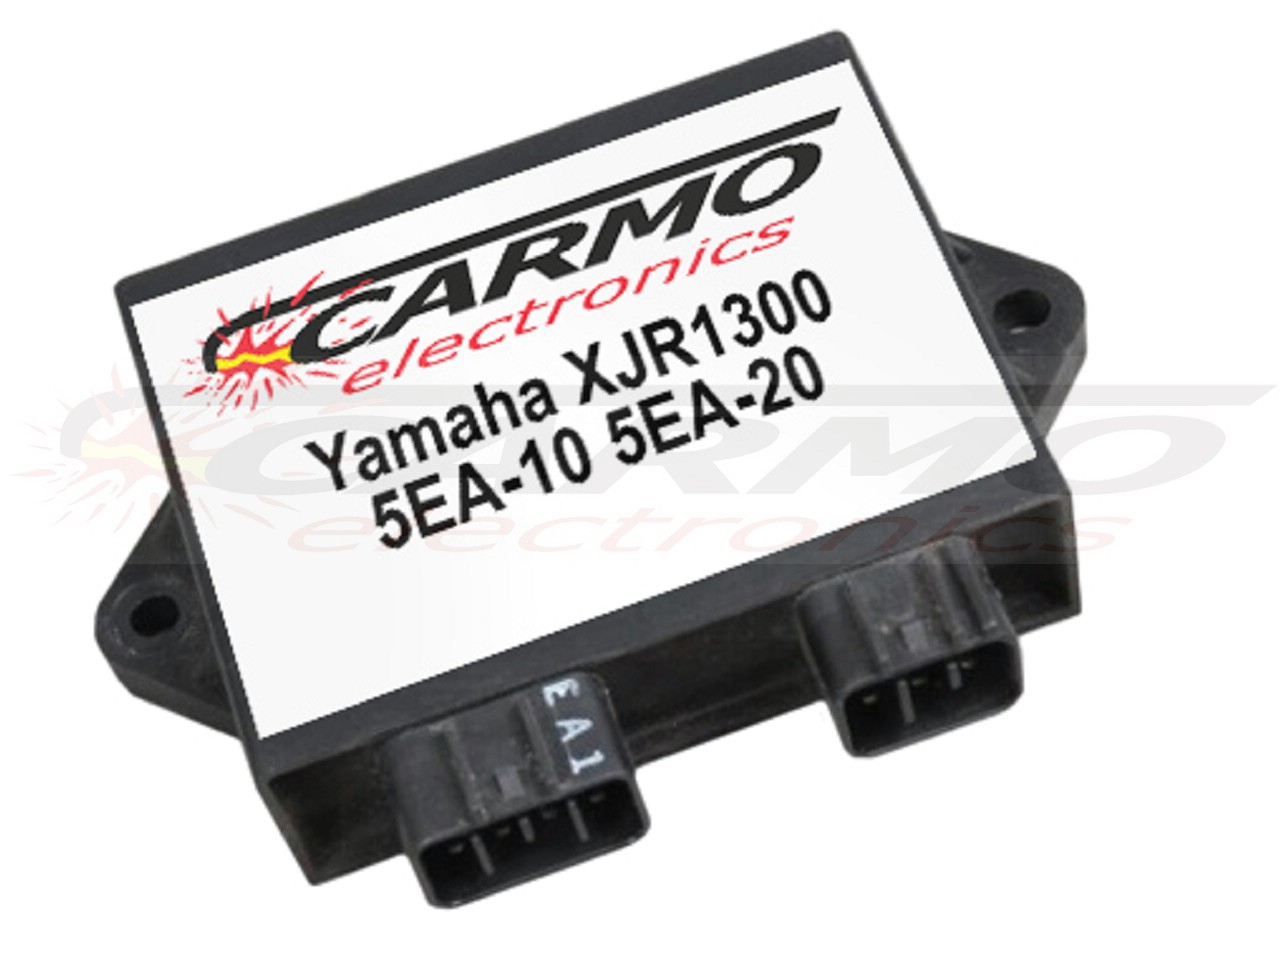 Yamaha XJR1300 SP C racer igniter ignition module CDI TCI Box (5EA-10, 5EA-20) - Clique na Imagem para Fechar